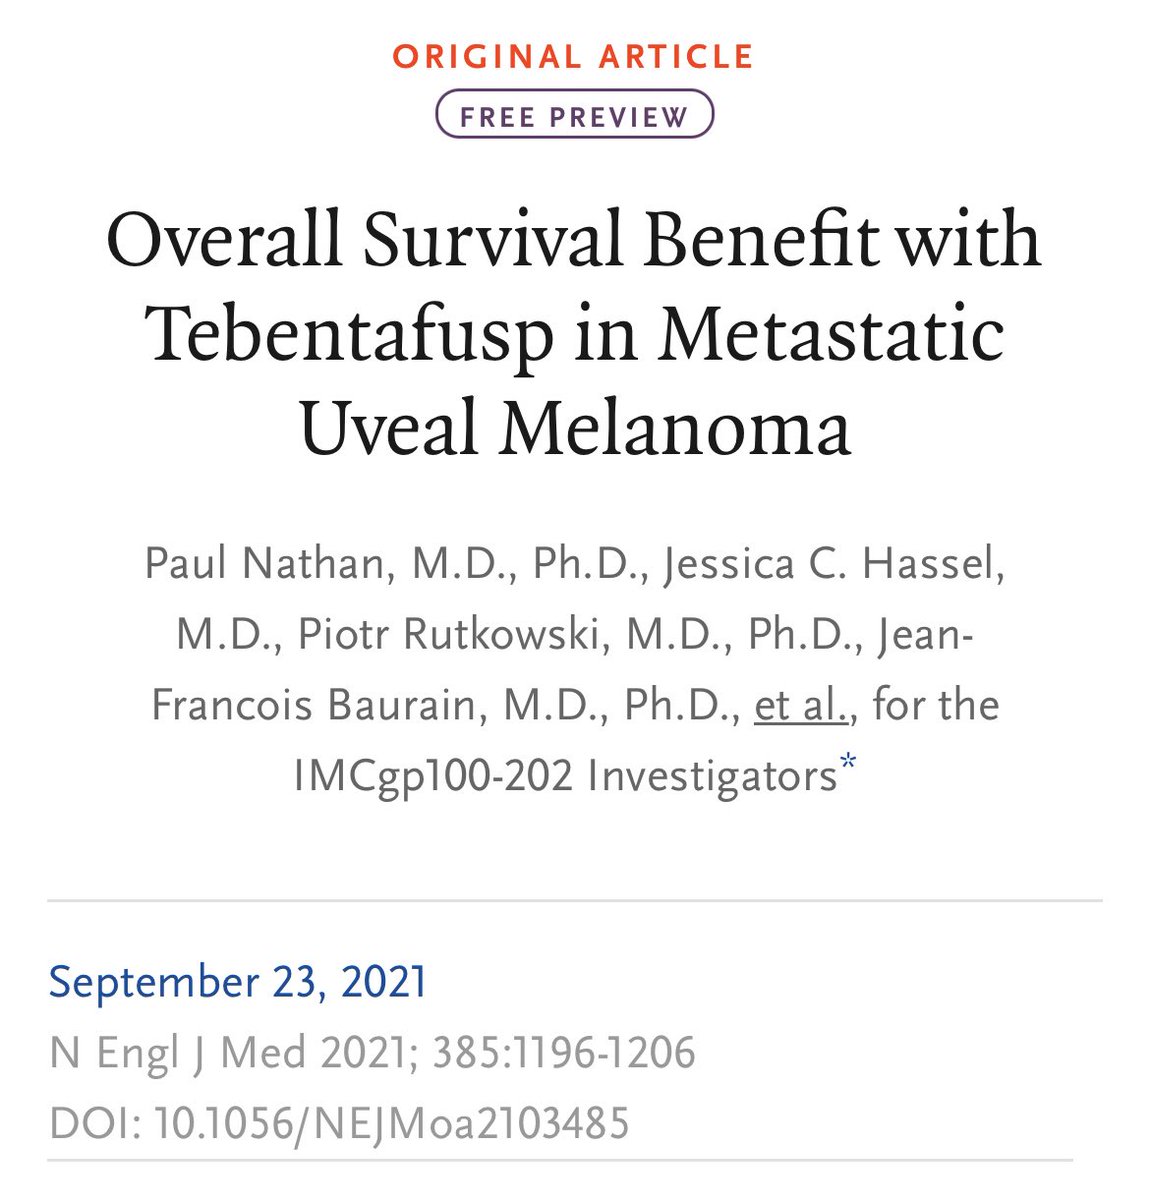 ❕Tebentafusp improved OS in Metastatic #UvealMelanoma compared to investigator’s choice in front line setting

❔New standard? 

nejm.org/doi/full/10.10…

@NEJM #oncology #melanoma